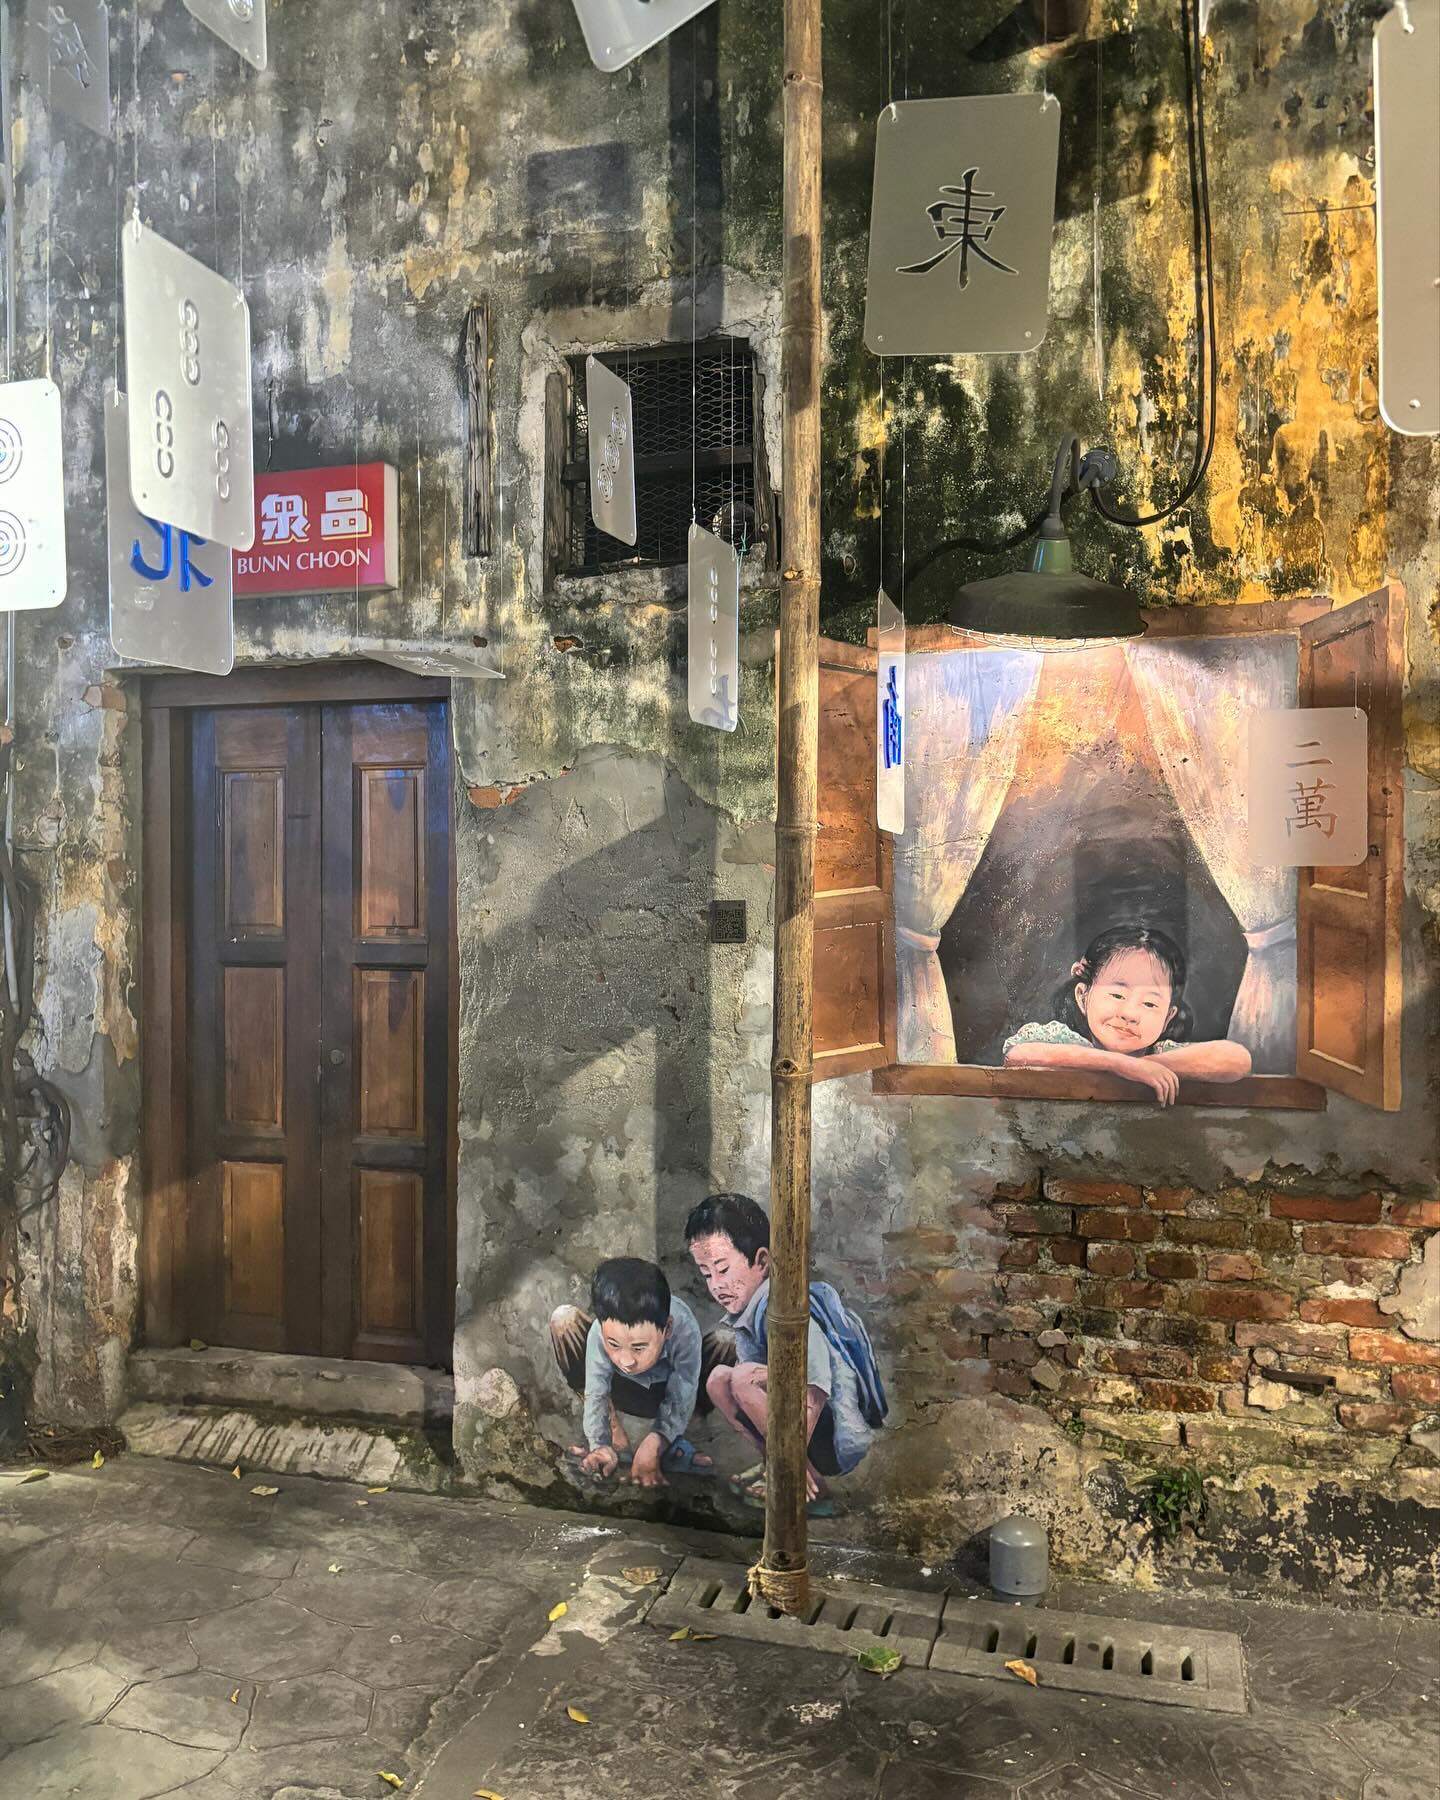 Stumbled upon vibrant street art while wandering through Chinatown in KL. 🎨
Near the famous night market Petaling.

 #UrbanArt #KLAdventures #chinatown #KualaLumpur #Petaling  #streetart